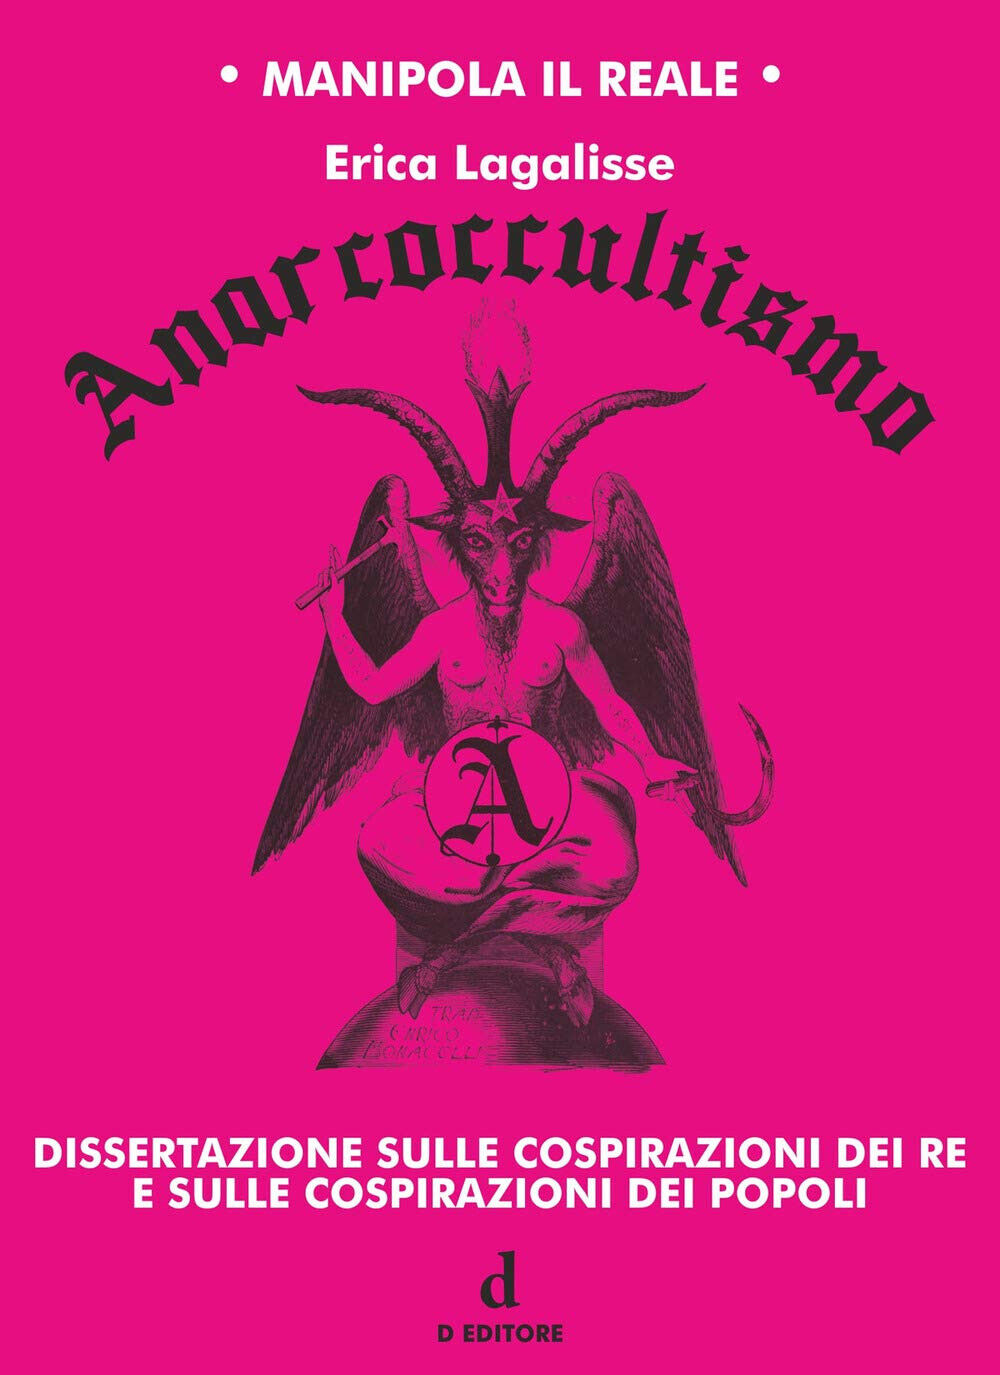 Anarcoccultismo - Erica Lagalisse - D Editore, 2020